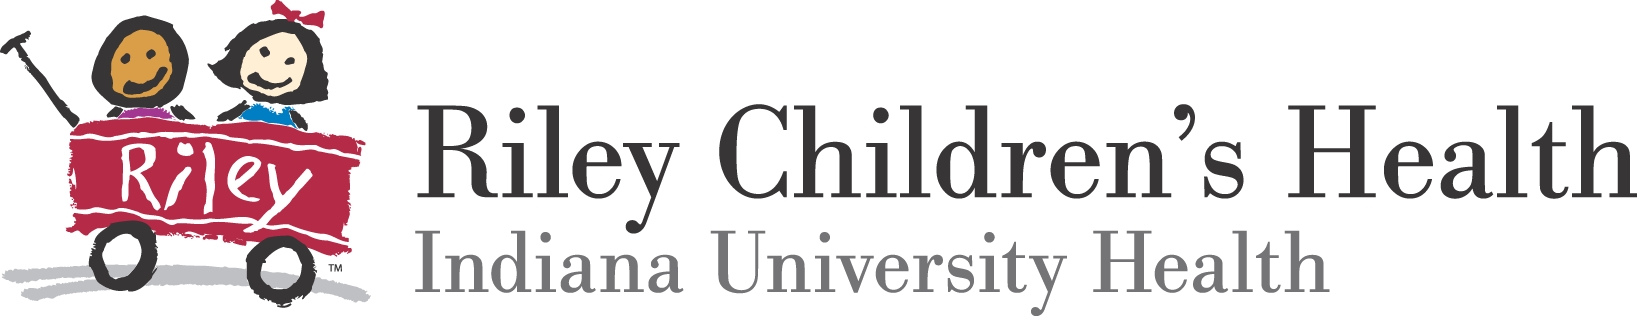 Riley Children’s Health Safe Sleep Campaign - Logo - https://s39939.pcdn.co/wp-content/uploads/2018/11/RileyChildrensHealthHz4c.jpg